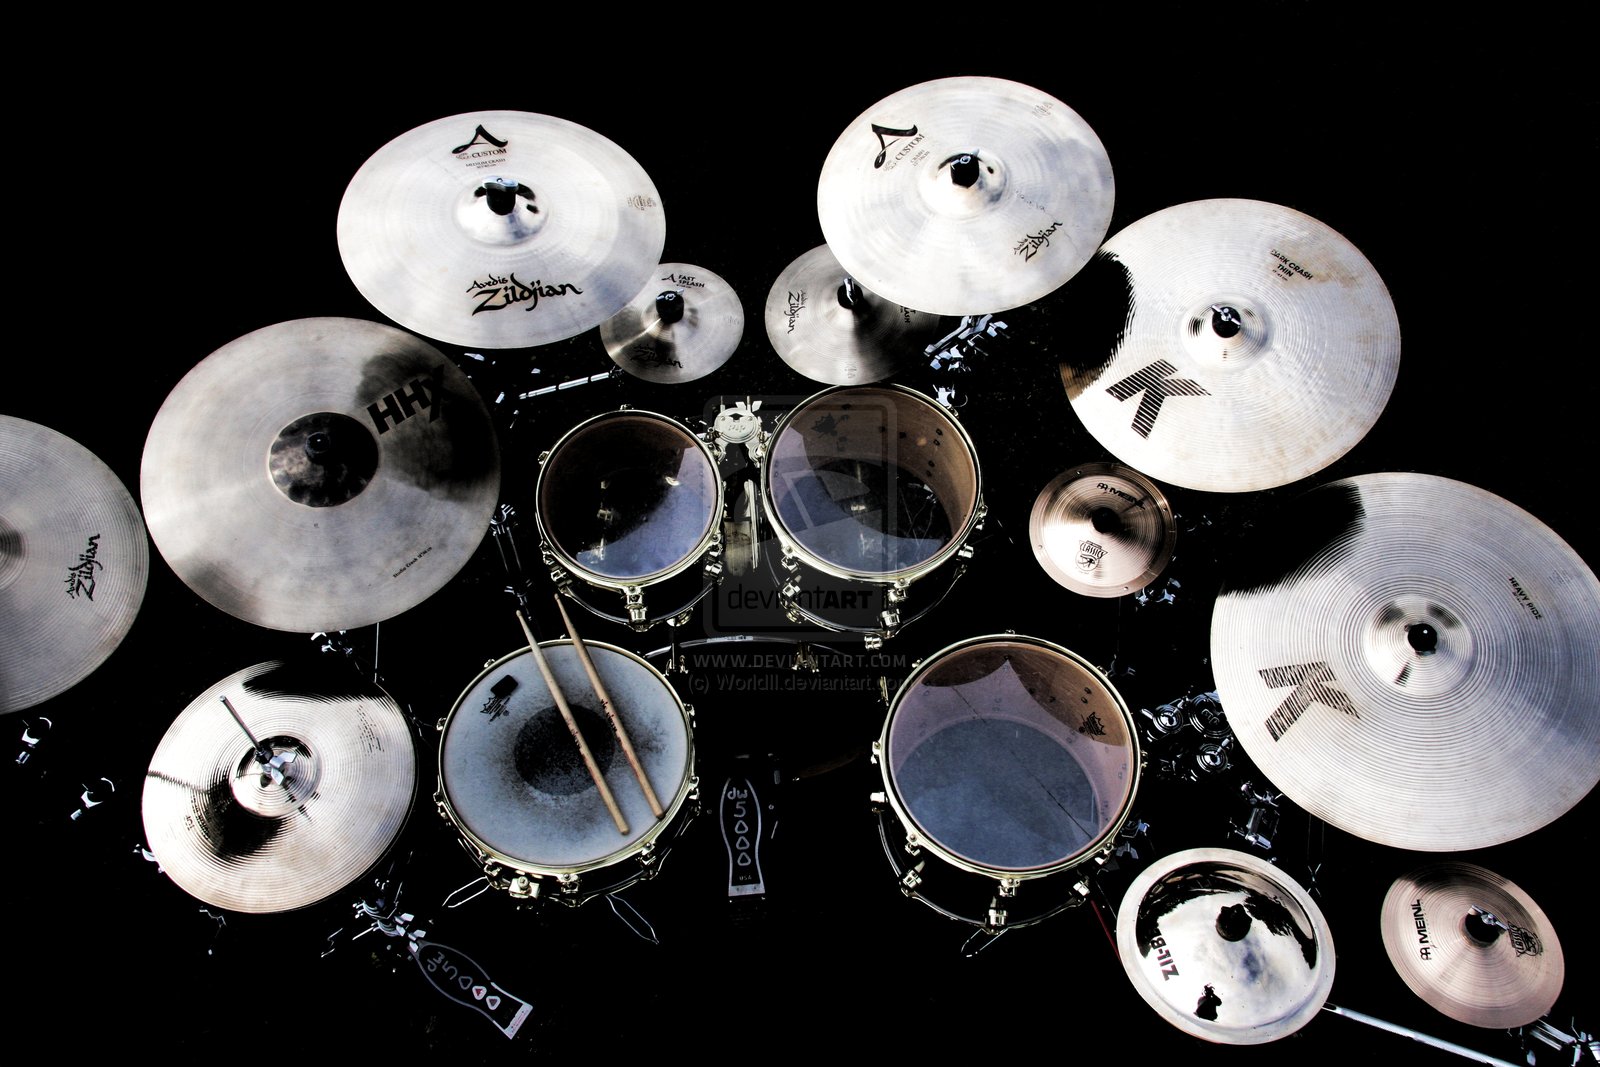 Drummer Wallpaper Black And White The Drum Kit W